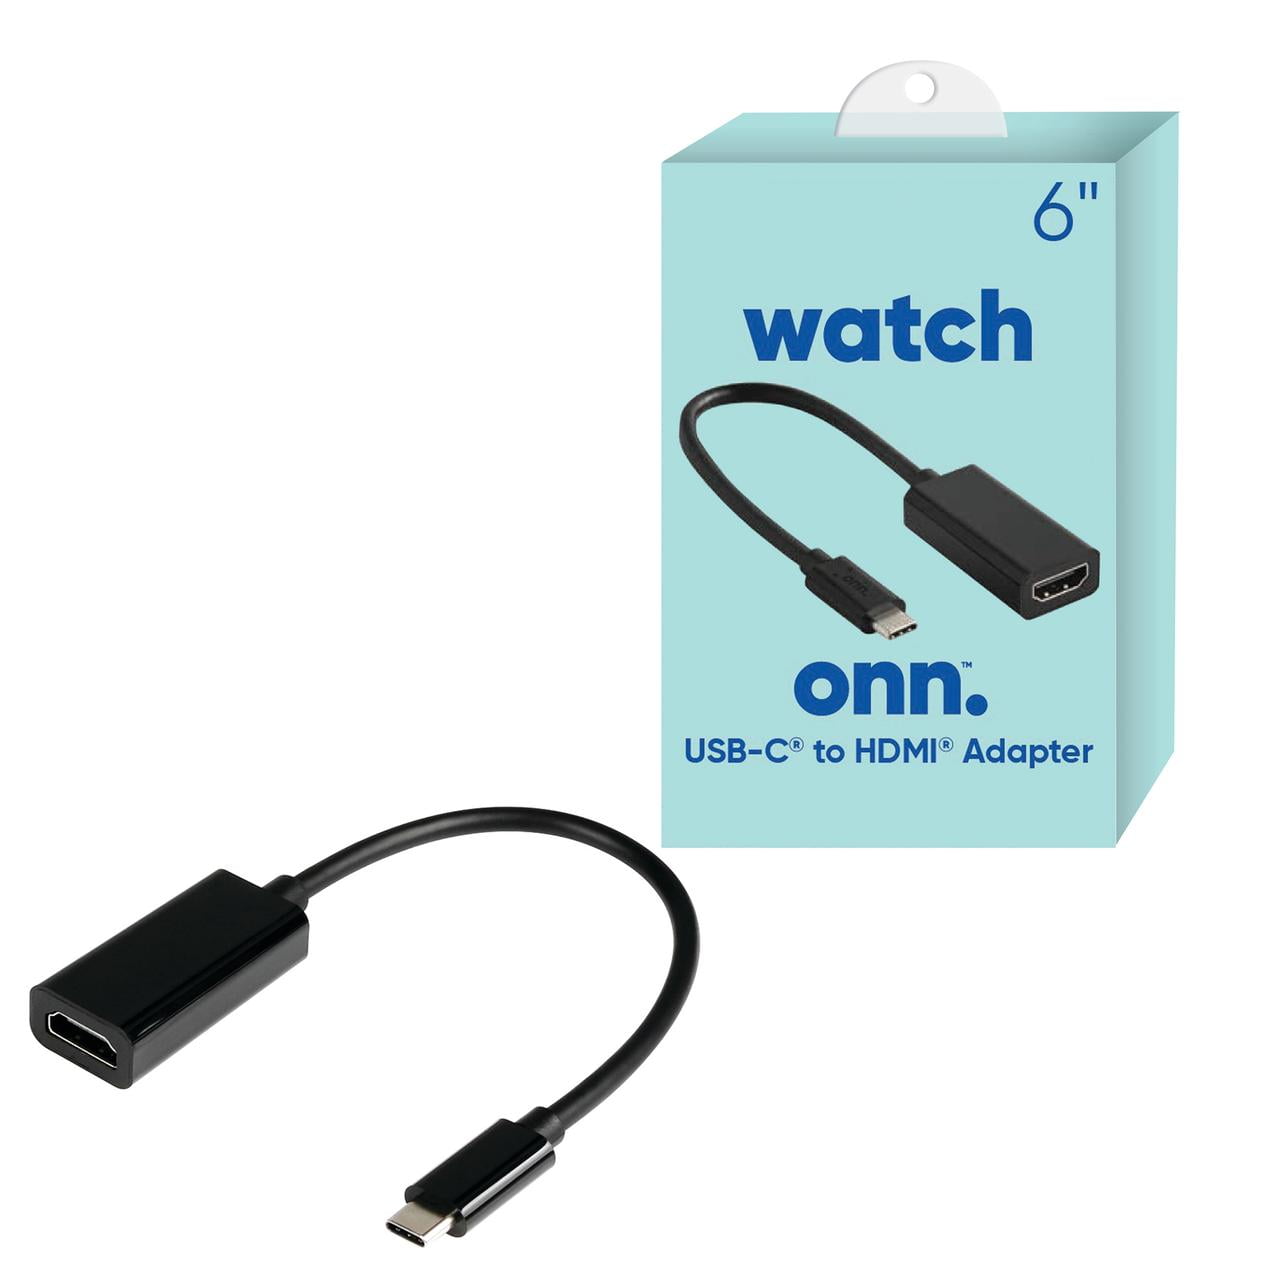 onn. to HDMI Adapter, - Walmart.com